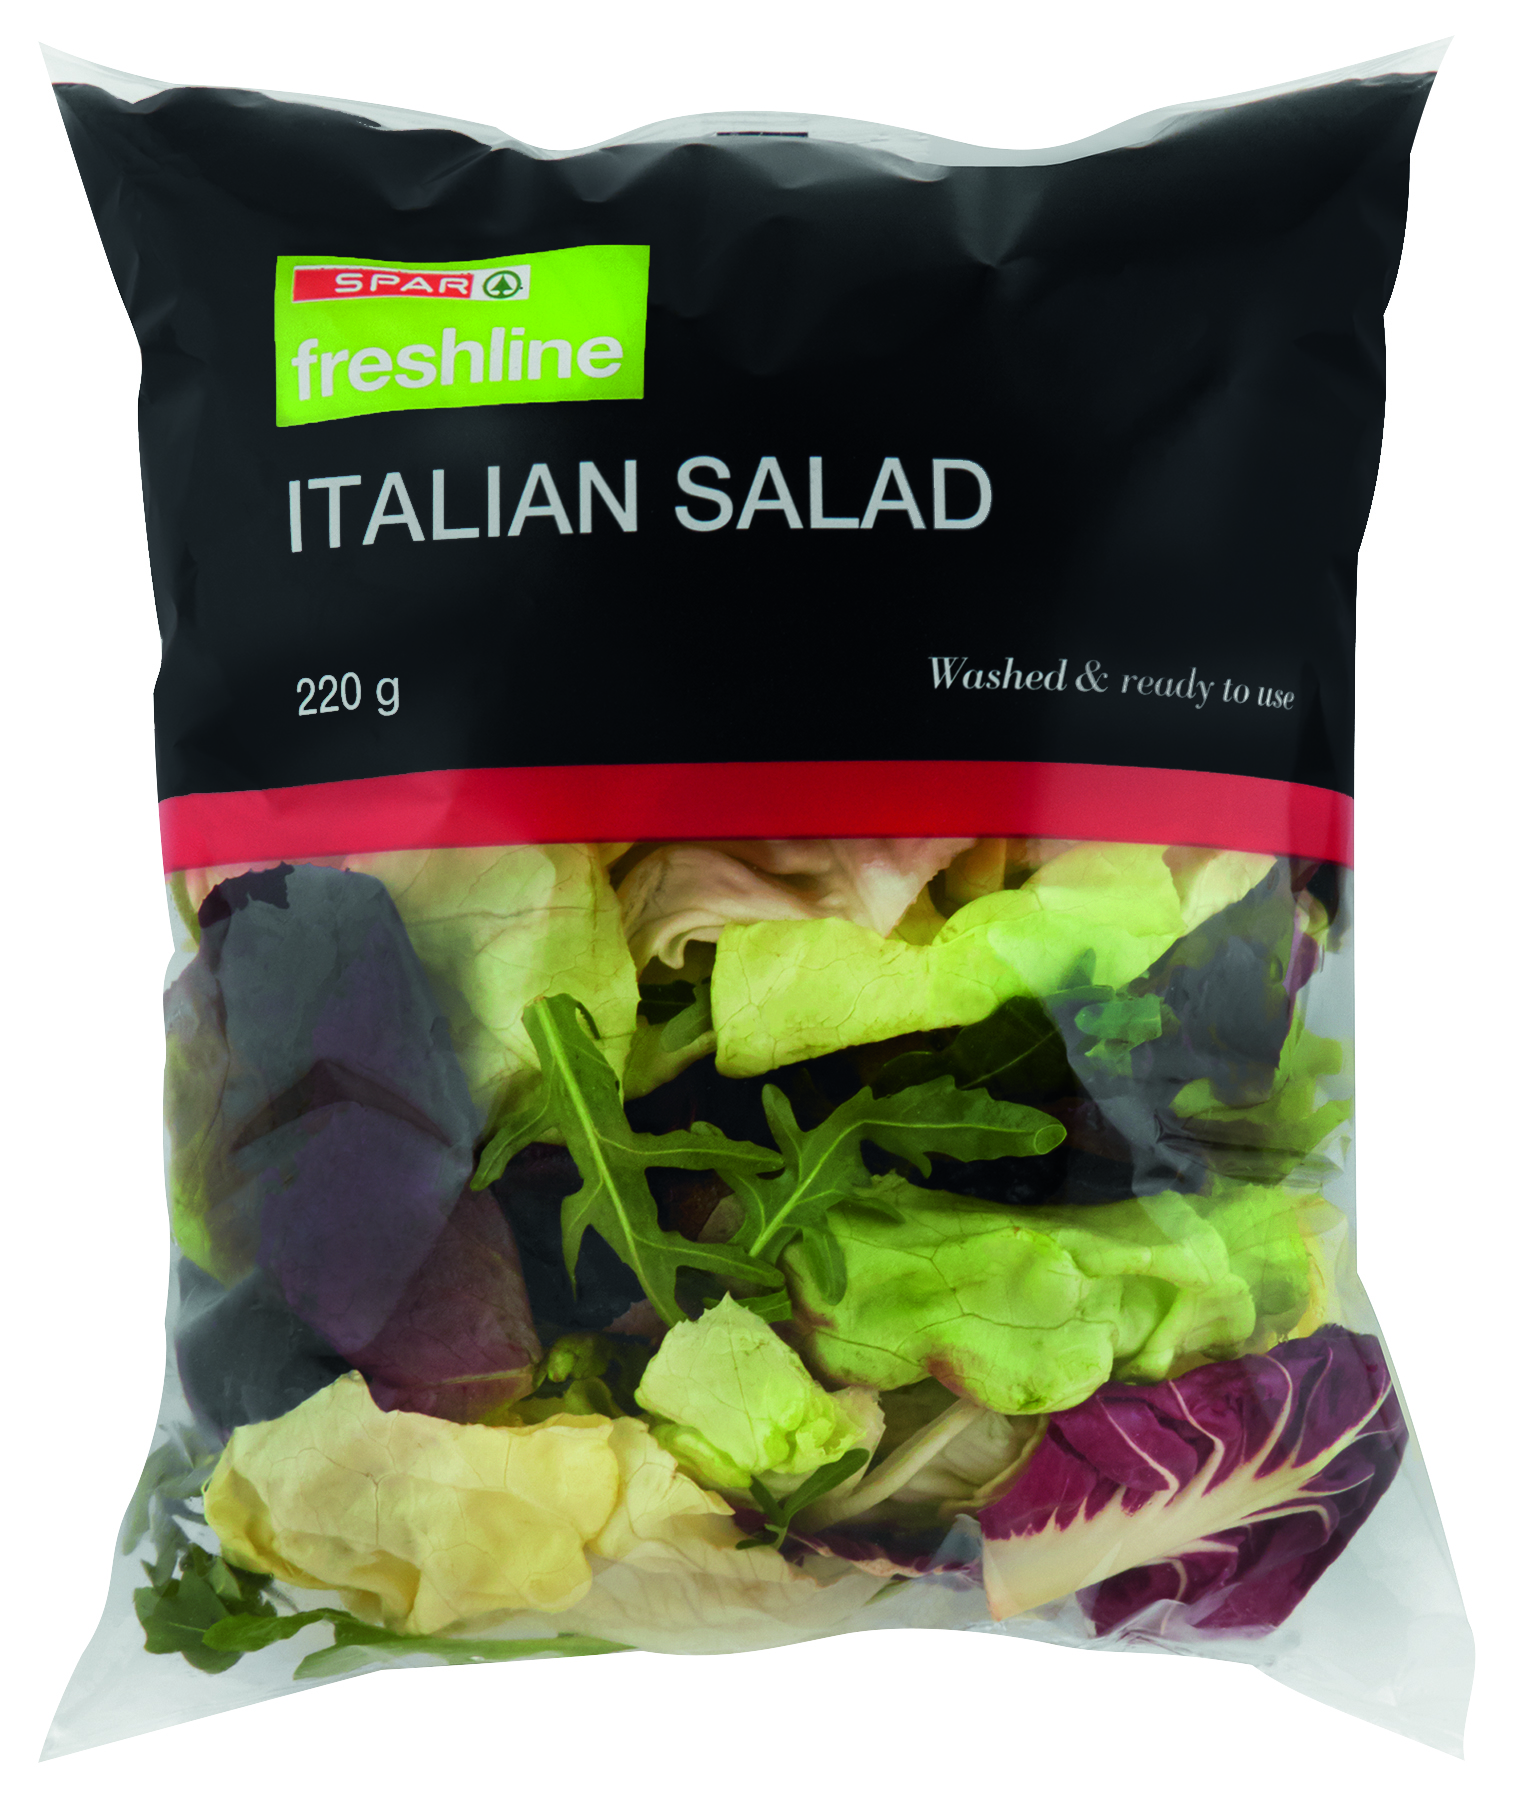 freshline italian salad 